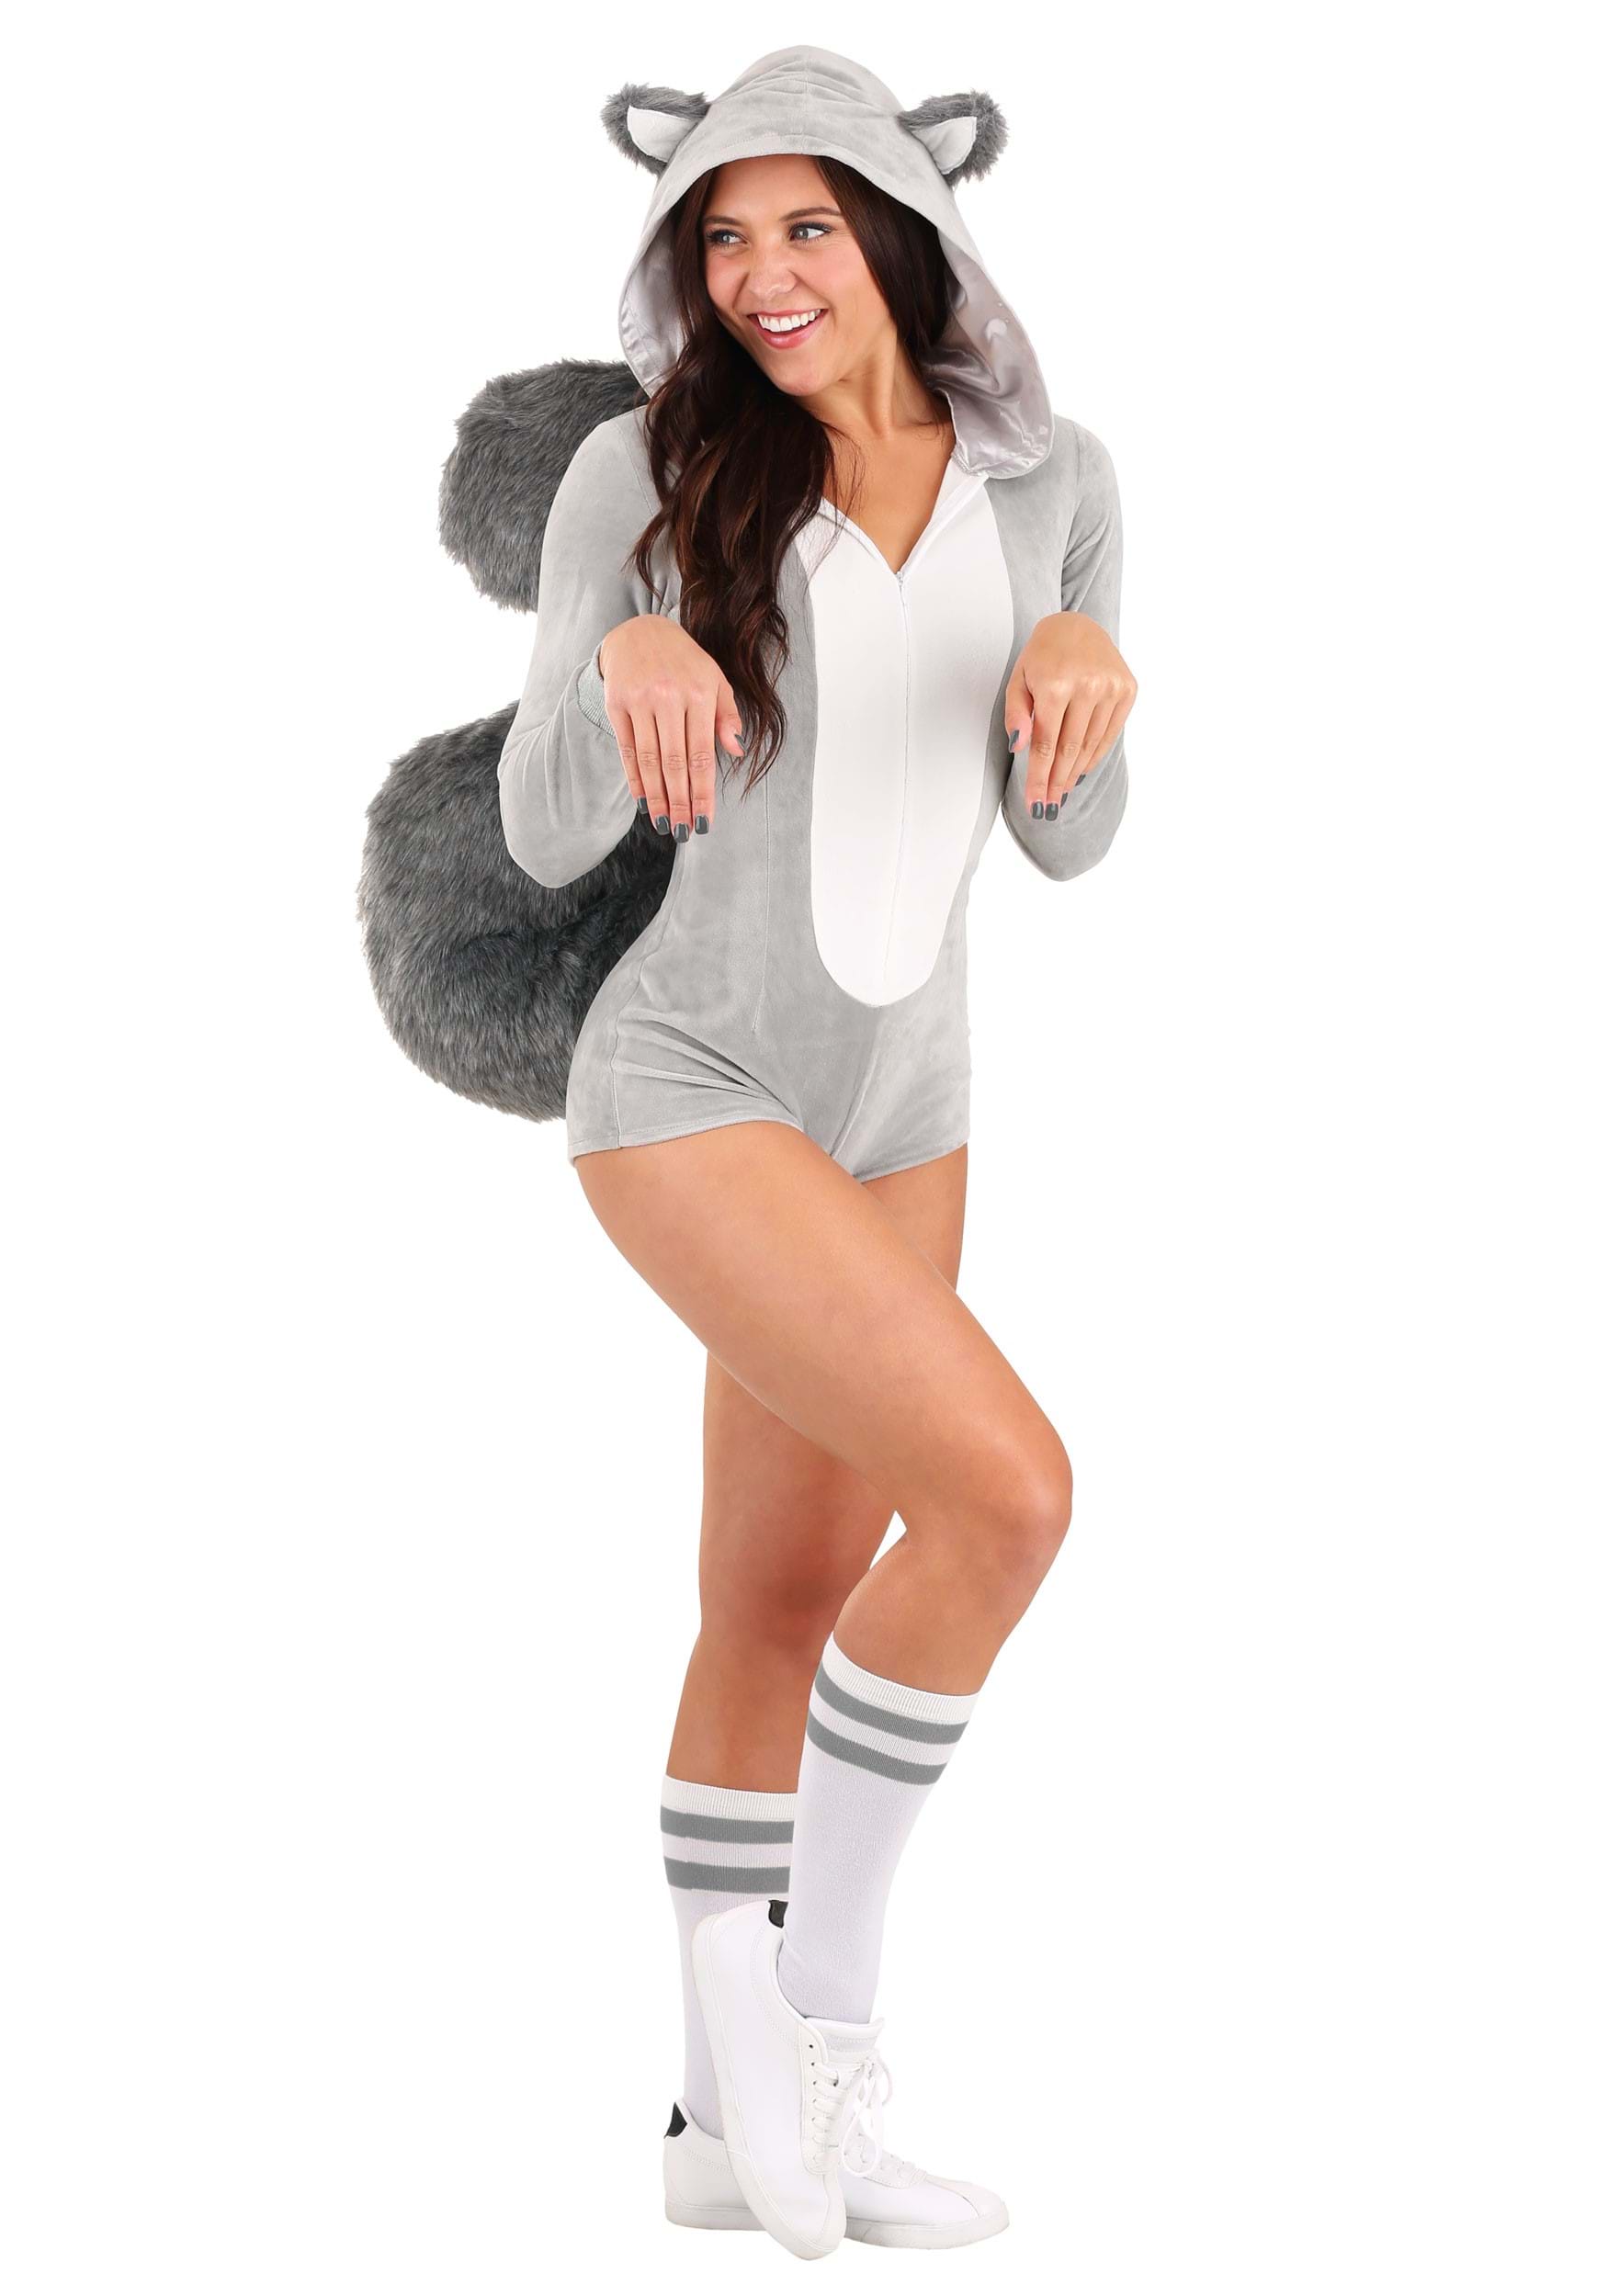 Image of Sassy Squirrel Women's Costume ID FUN1353AD-S